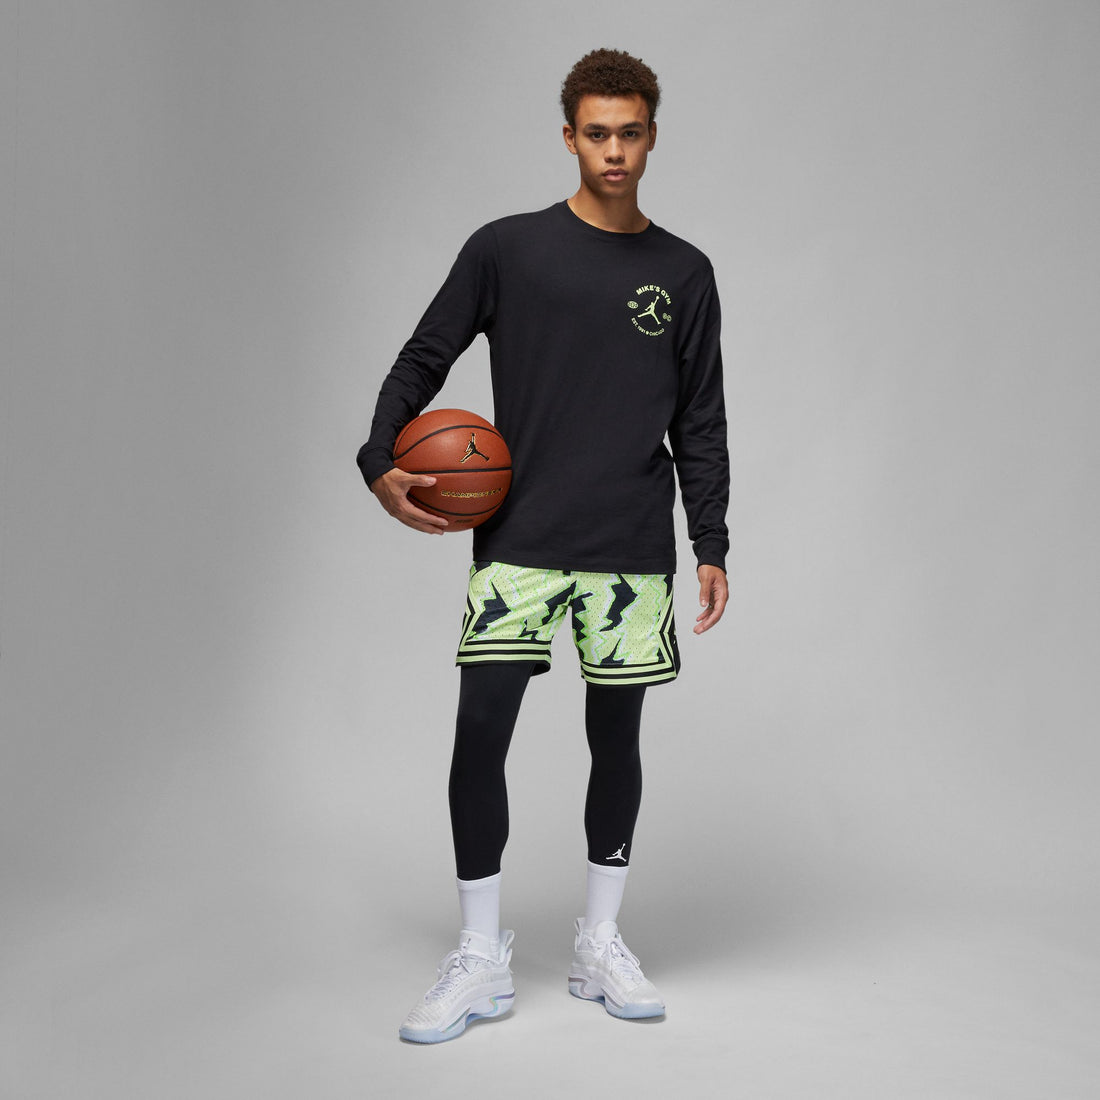 Nike Men's Jordan AJ 3/4 Compression Training Tights Grey Black